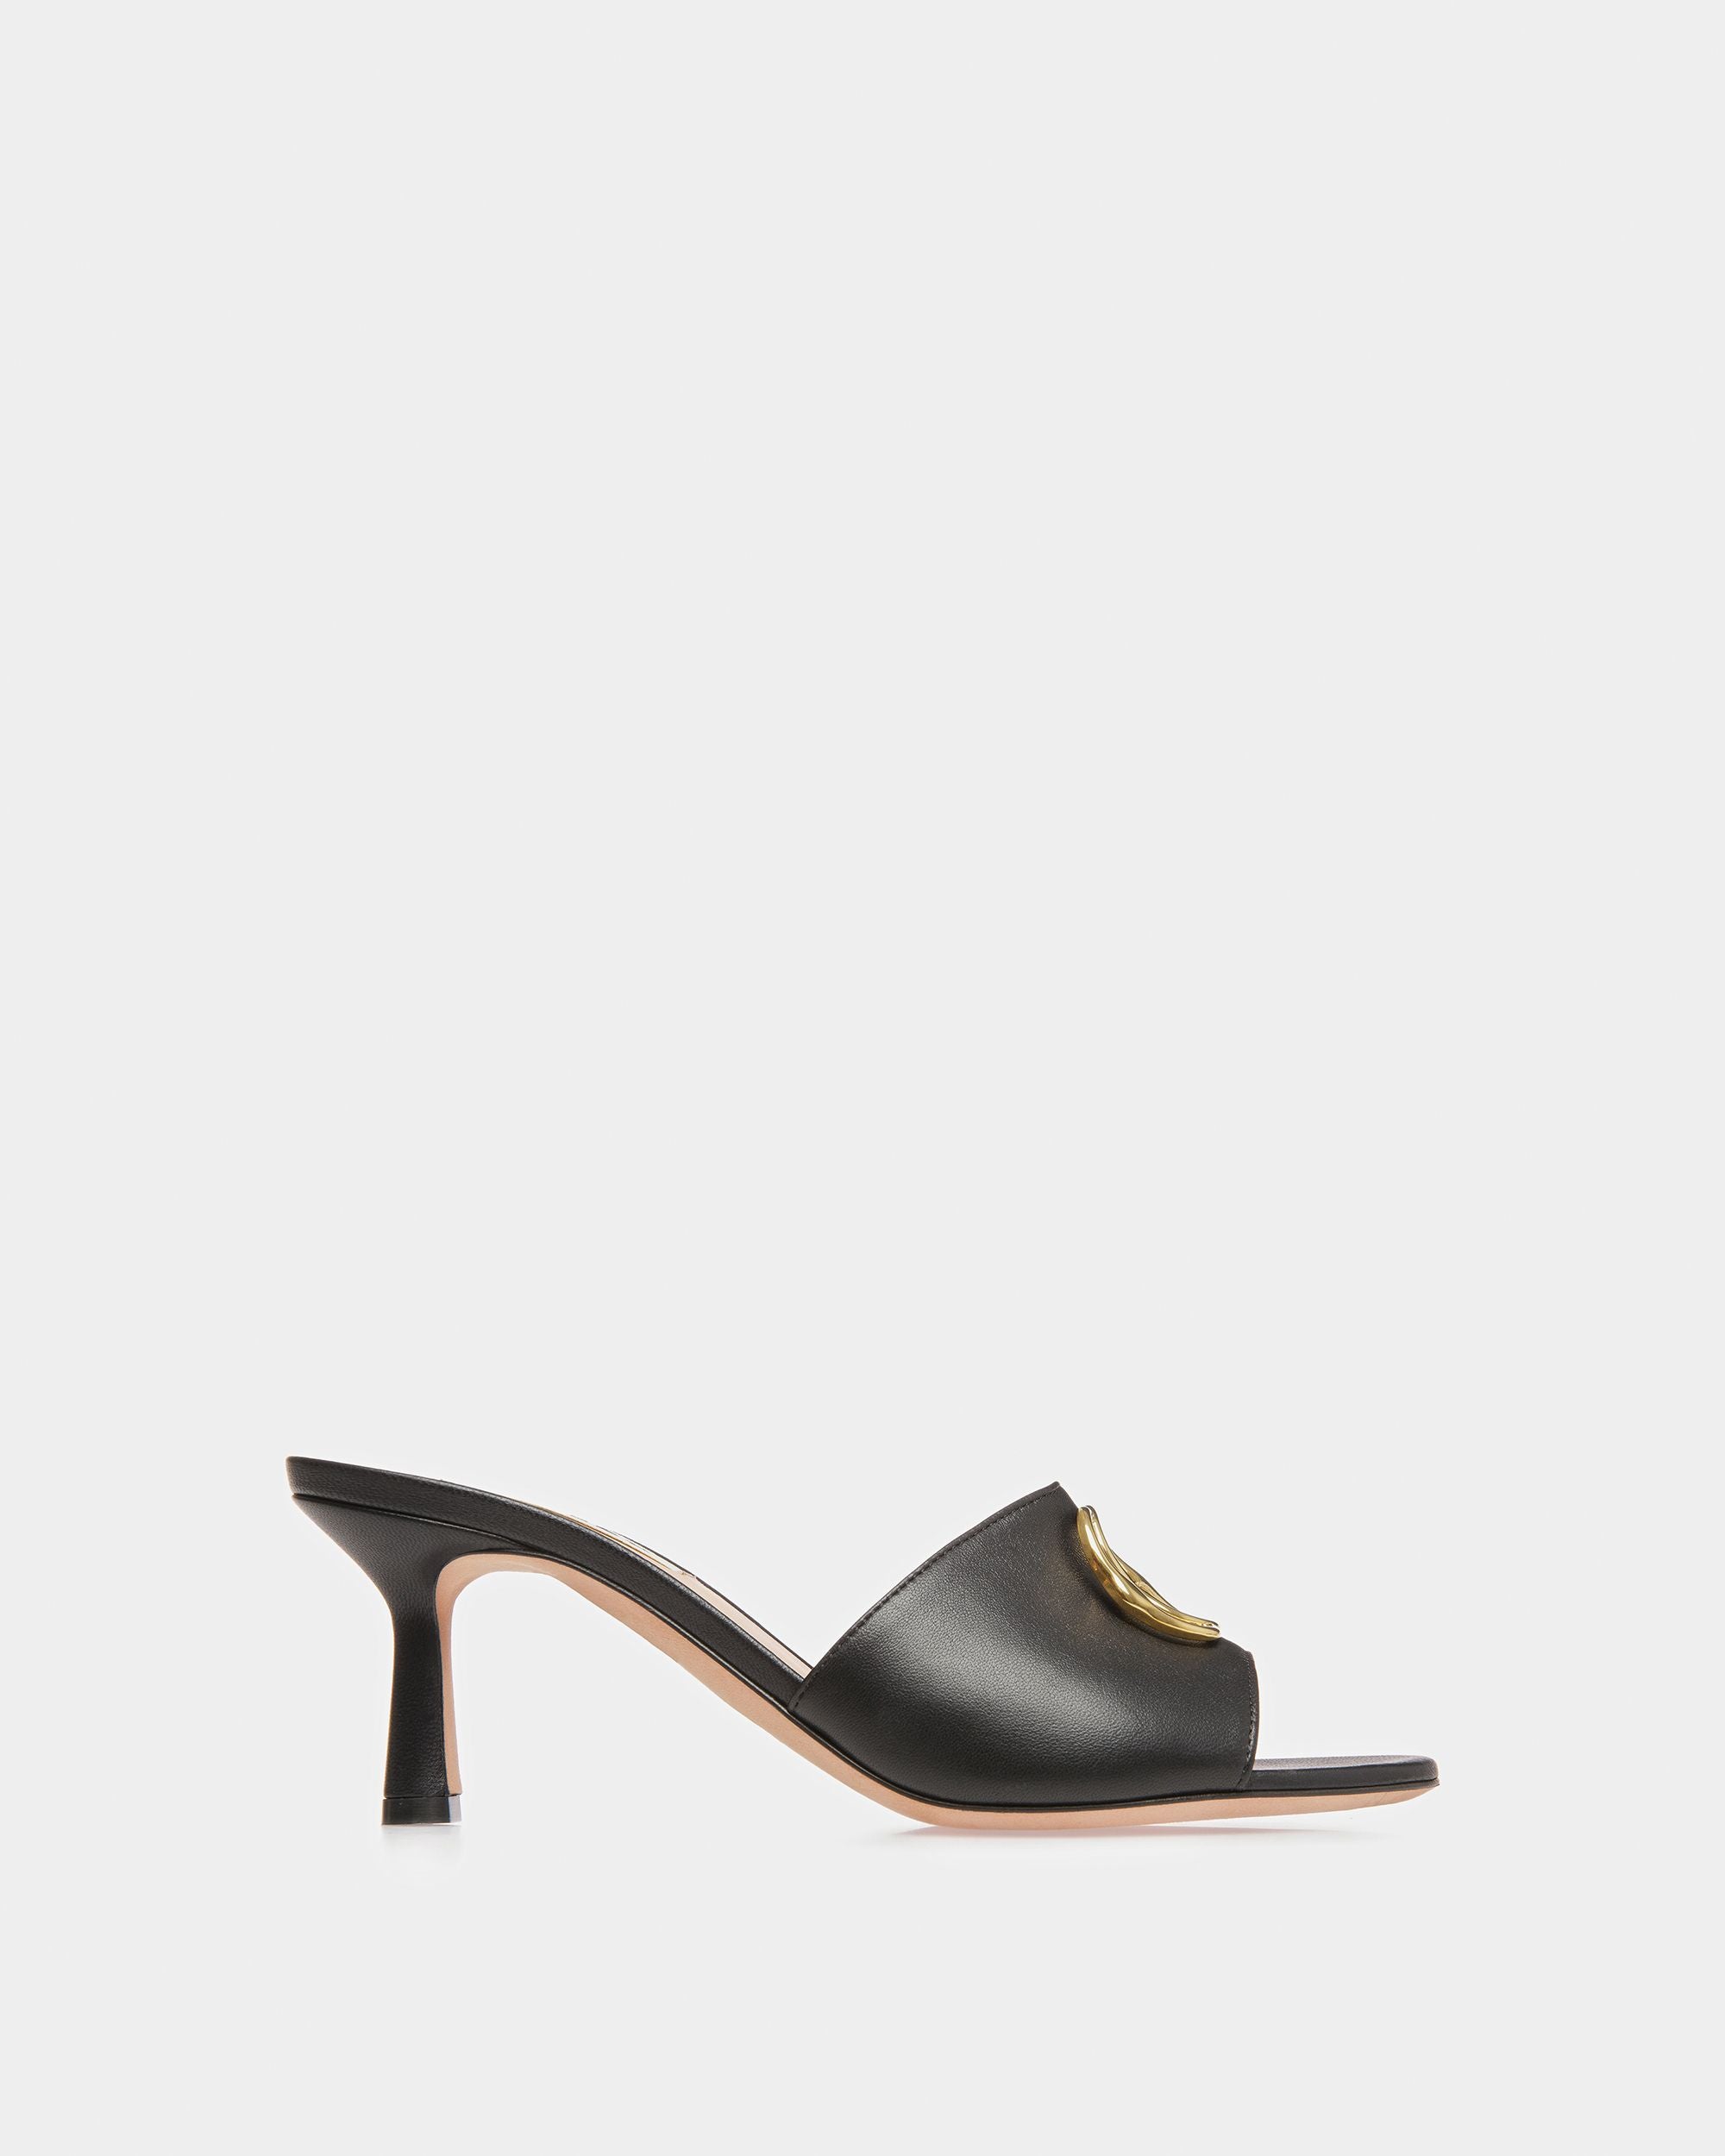 Geha | Women's Emblem Sandals | Black Leather | Bally | Still Life Side